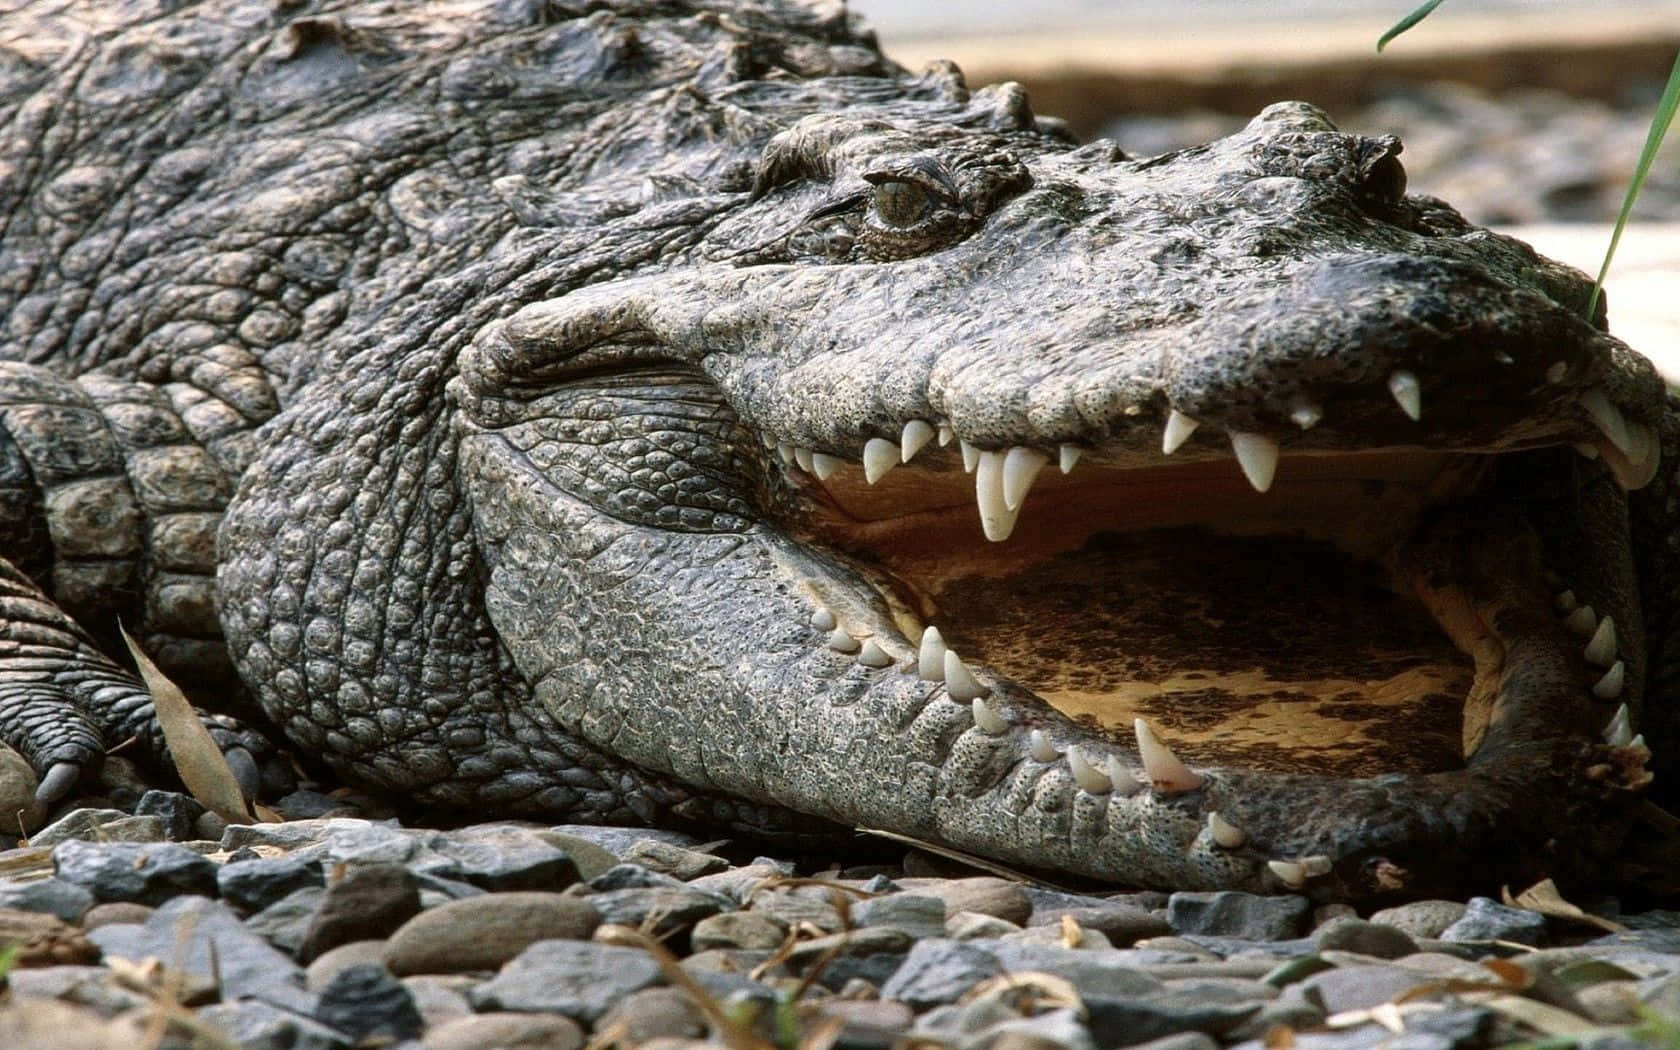 Stunning Wildlife Photography - Majestic Crocodile Lounging in Natural Habitat